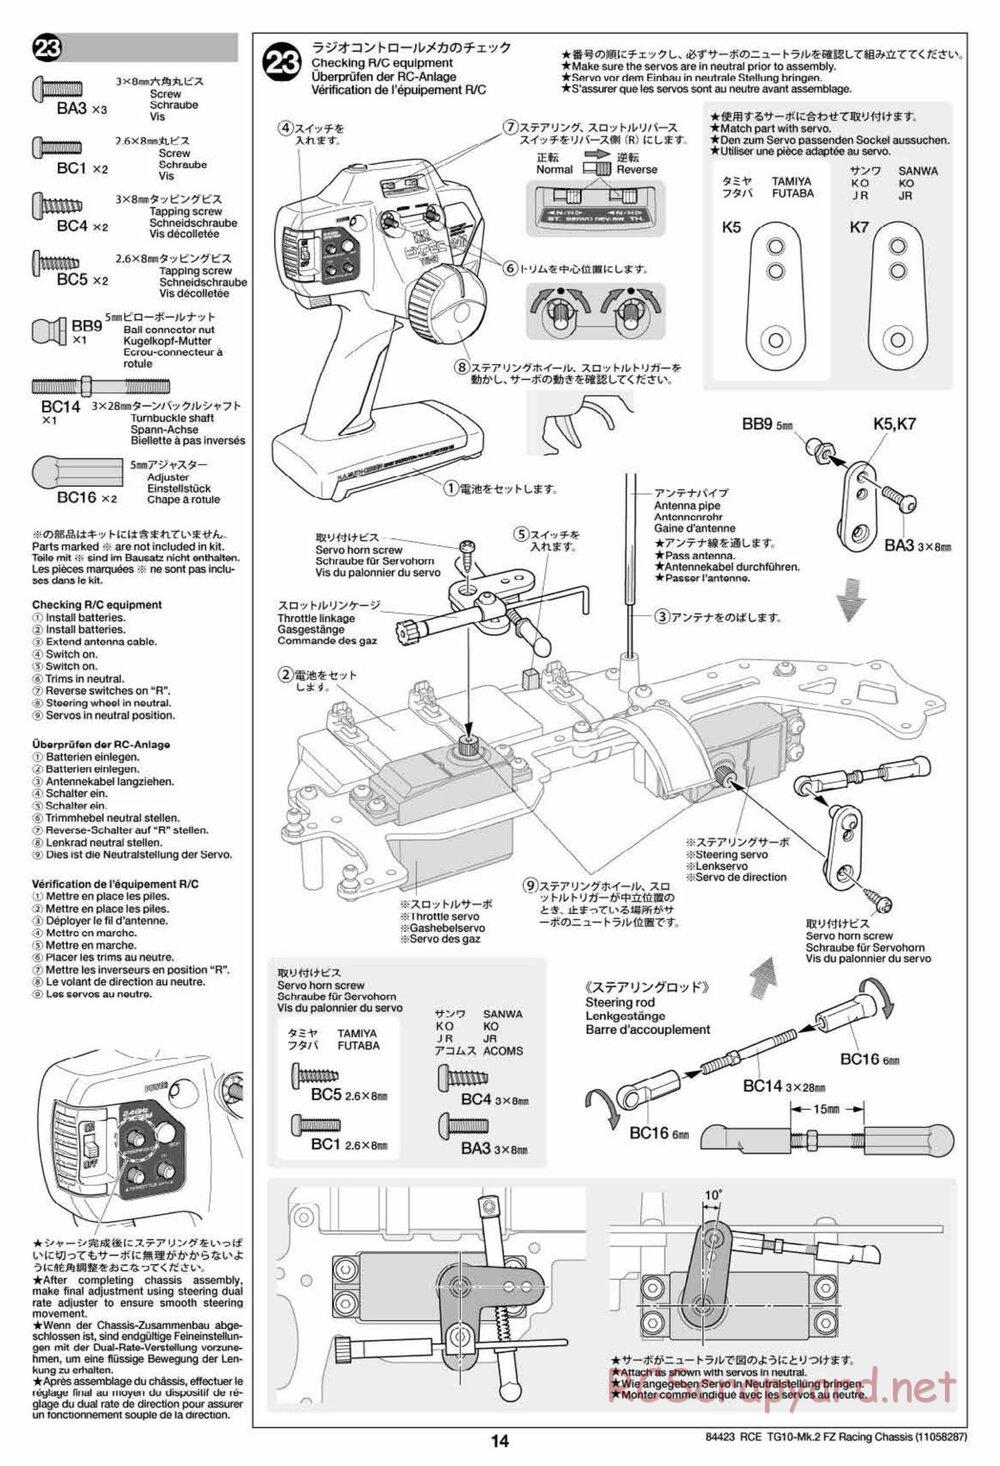 Tamiya - TG10 Mk.2 FZ Racing Chassis - Manual - Page 14